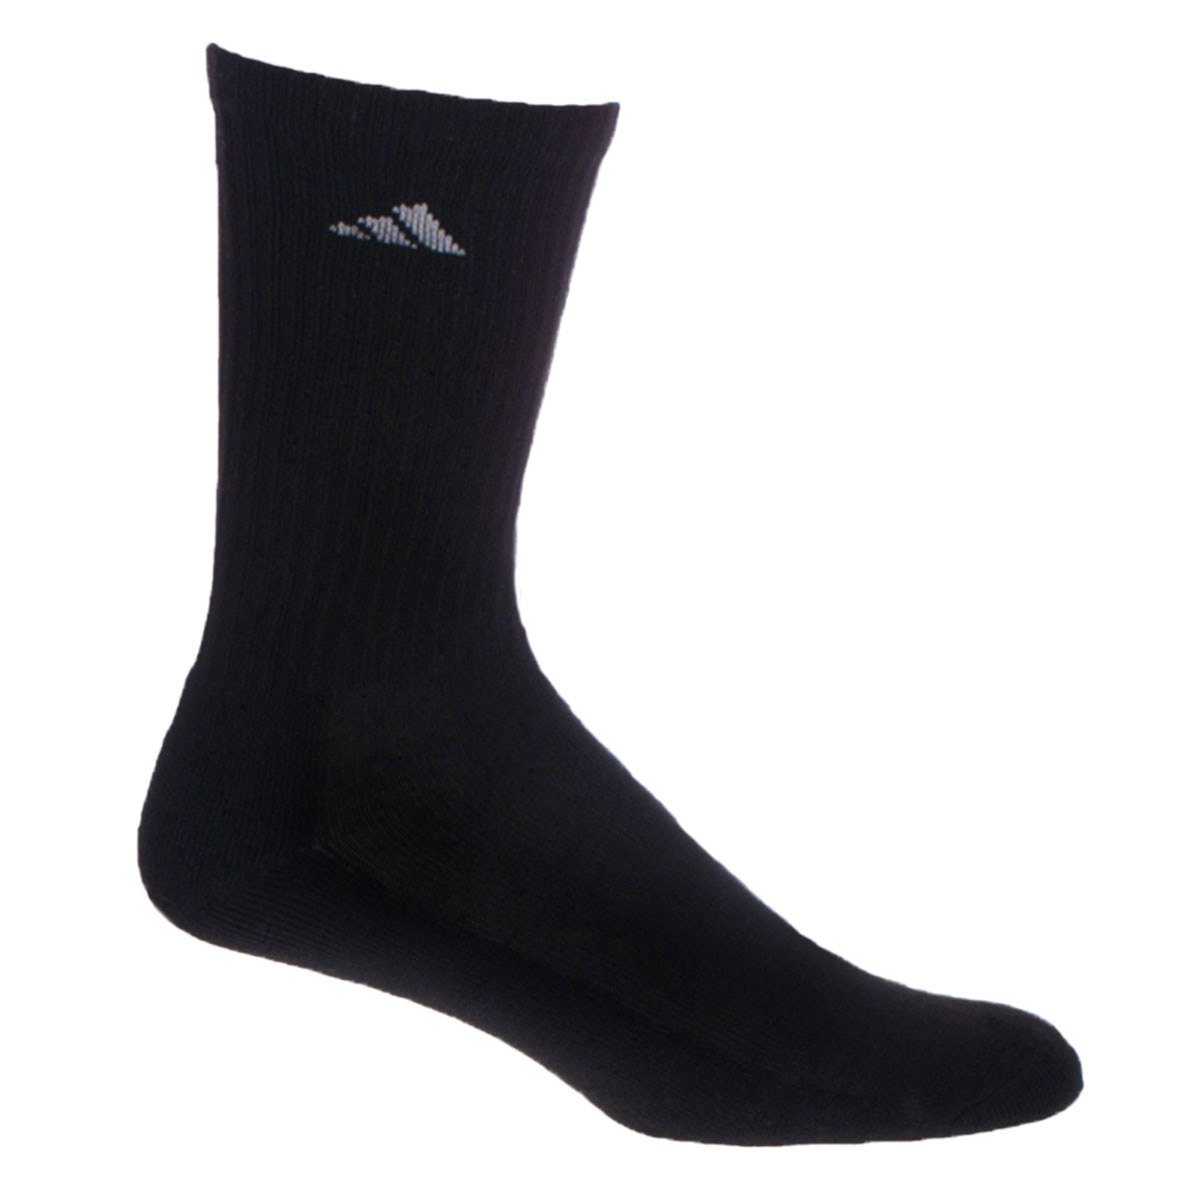 Adidas Men's Athletic Crew Socks, 6-Pack